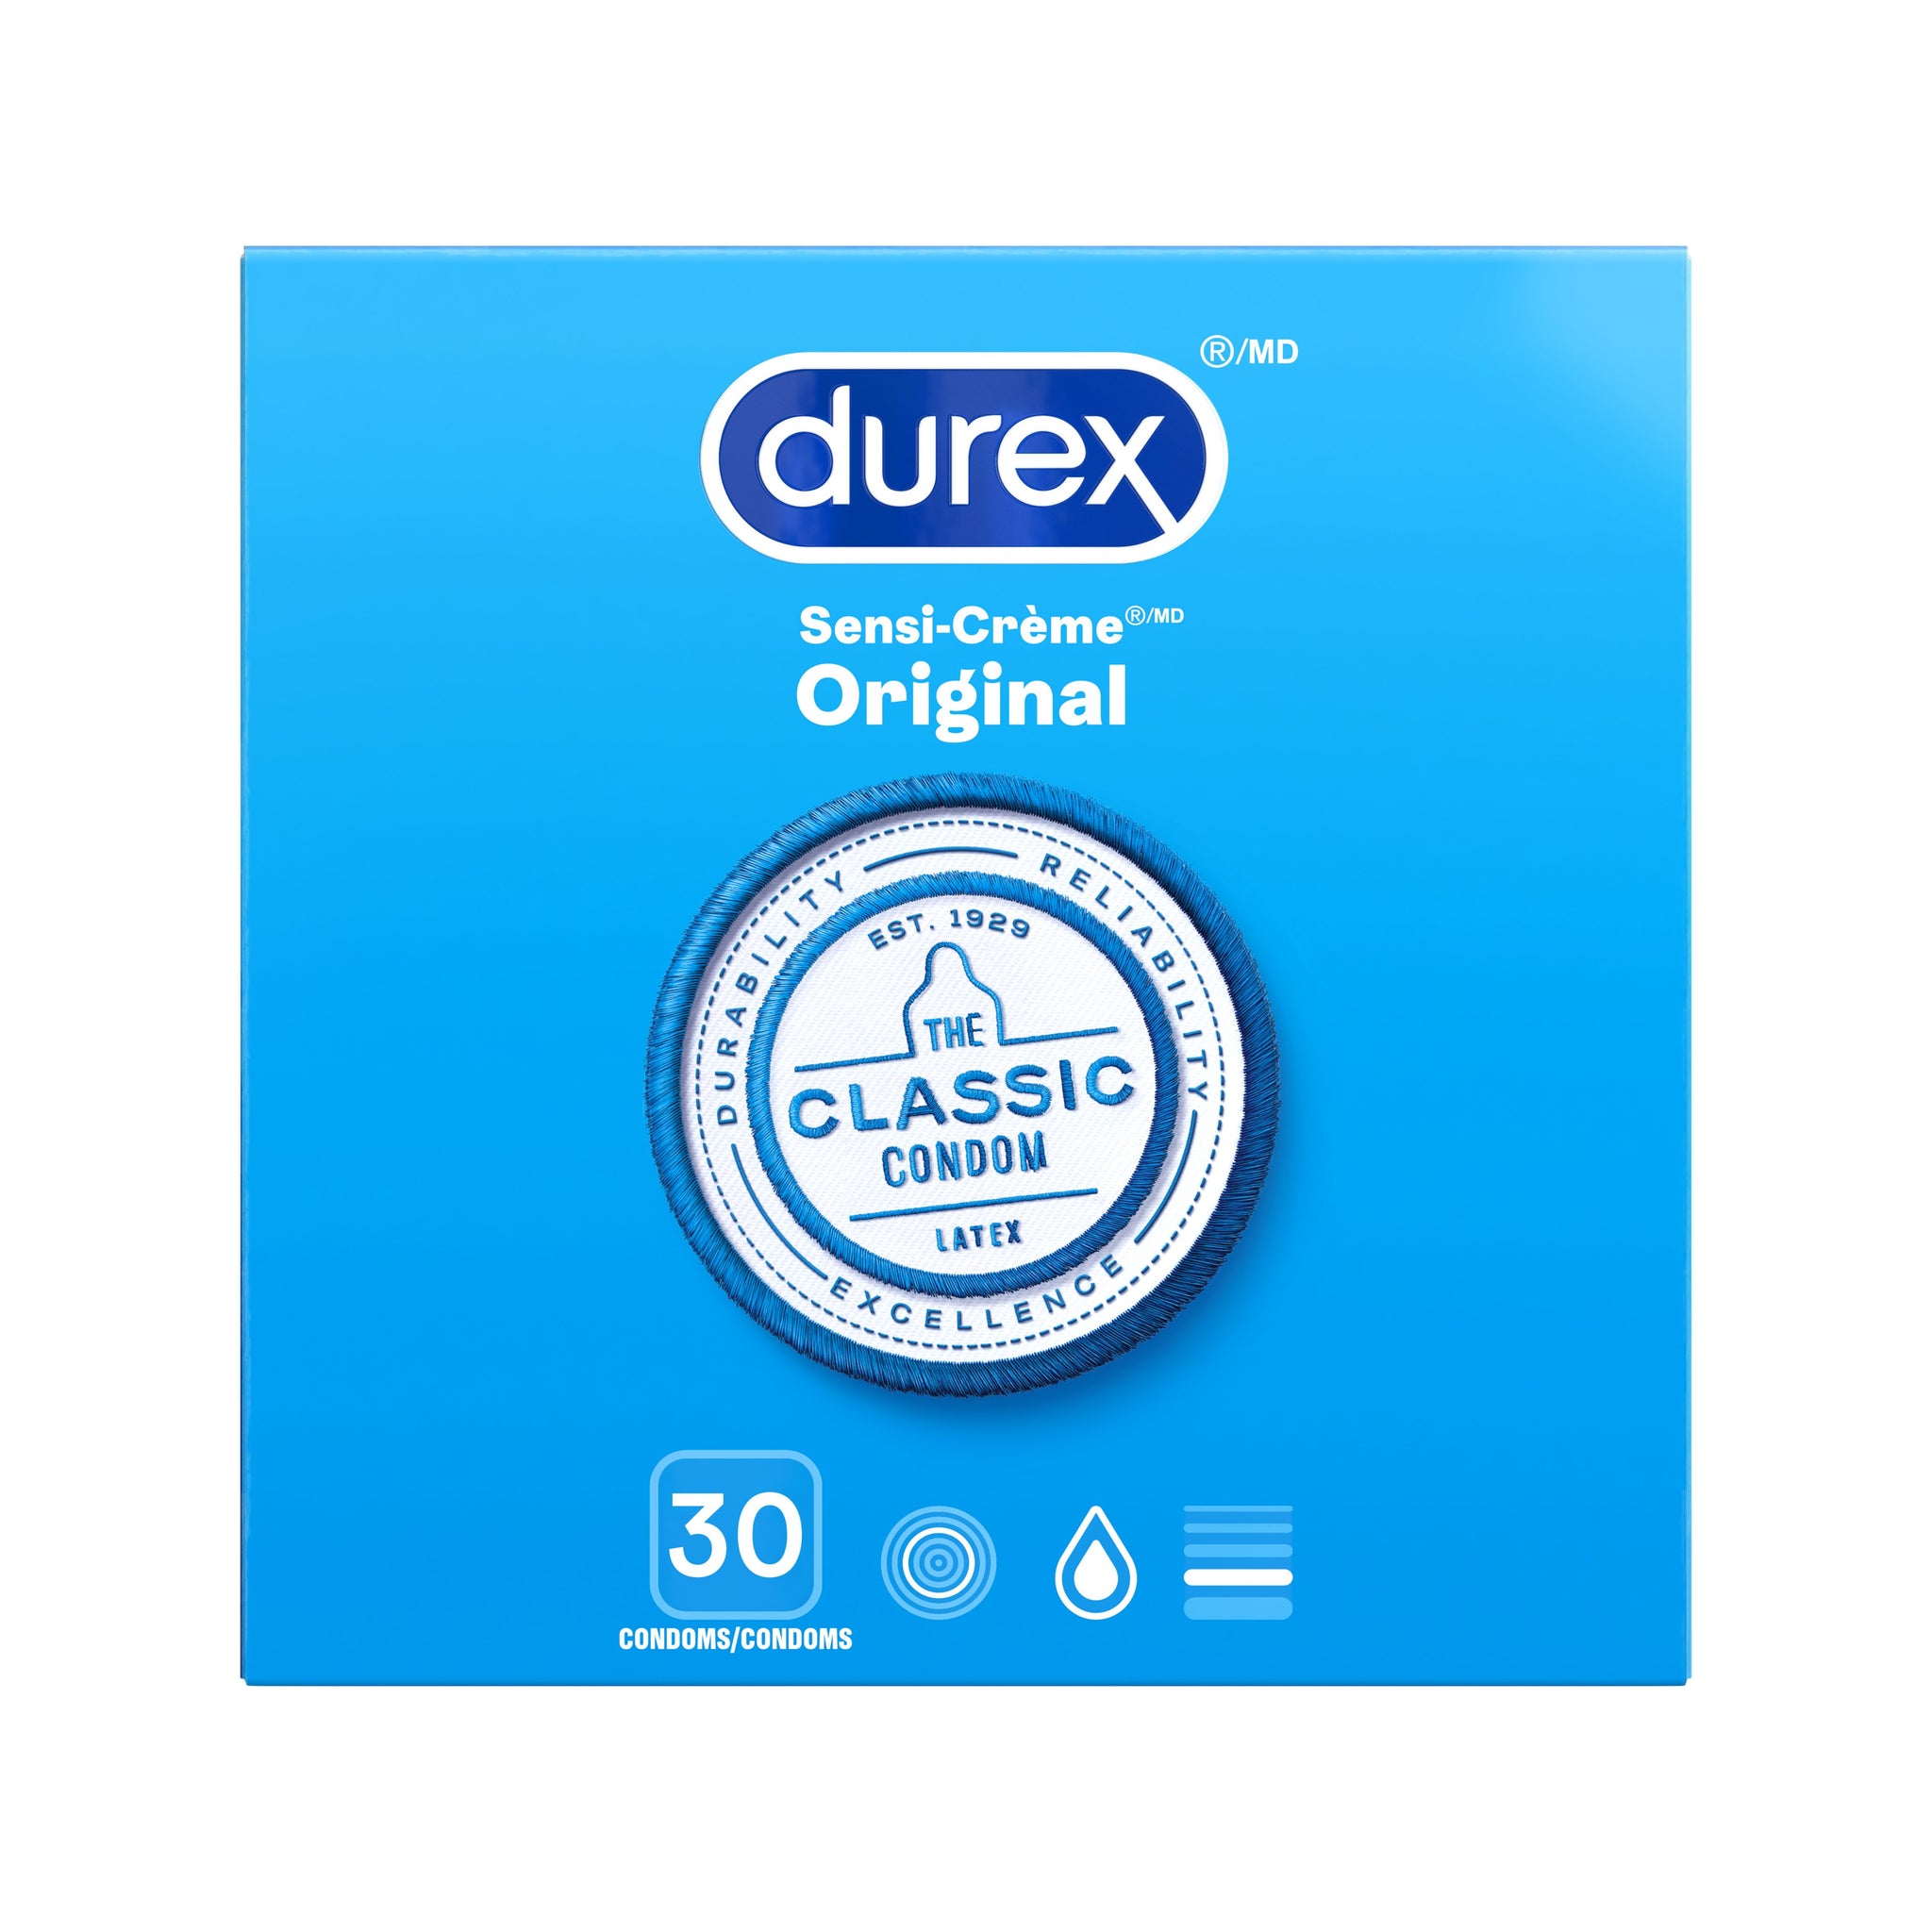 packshot of Durex Sensi-Crème Original condoms, 30 pack.